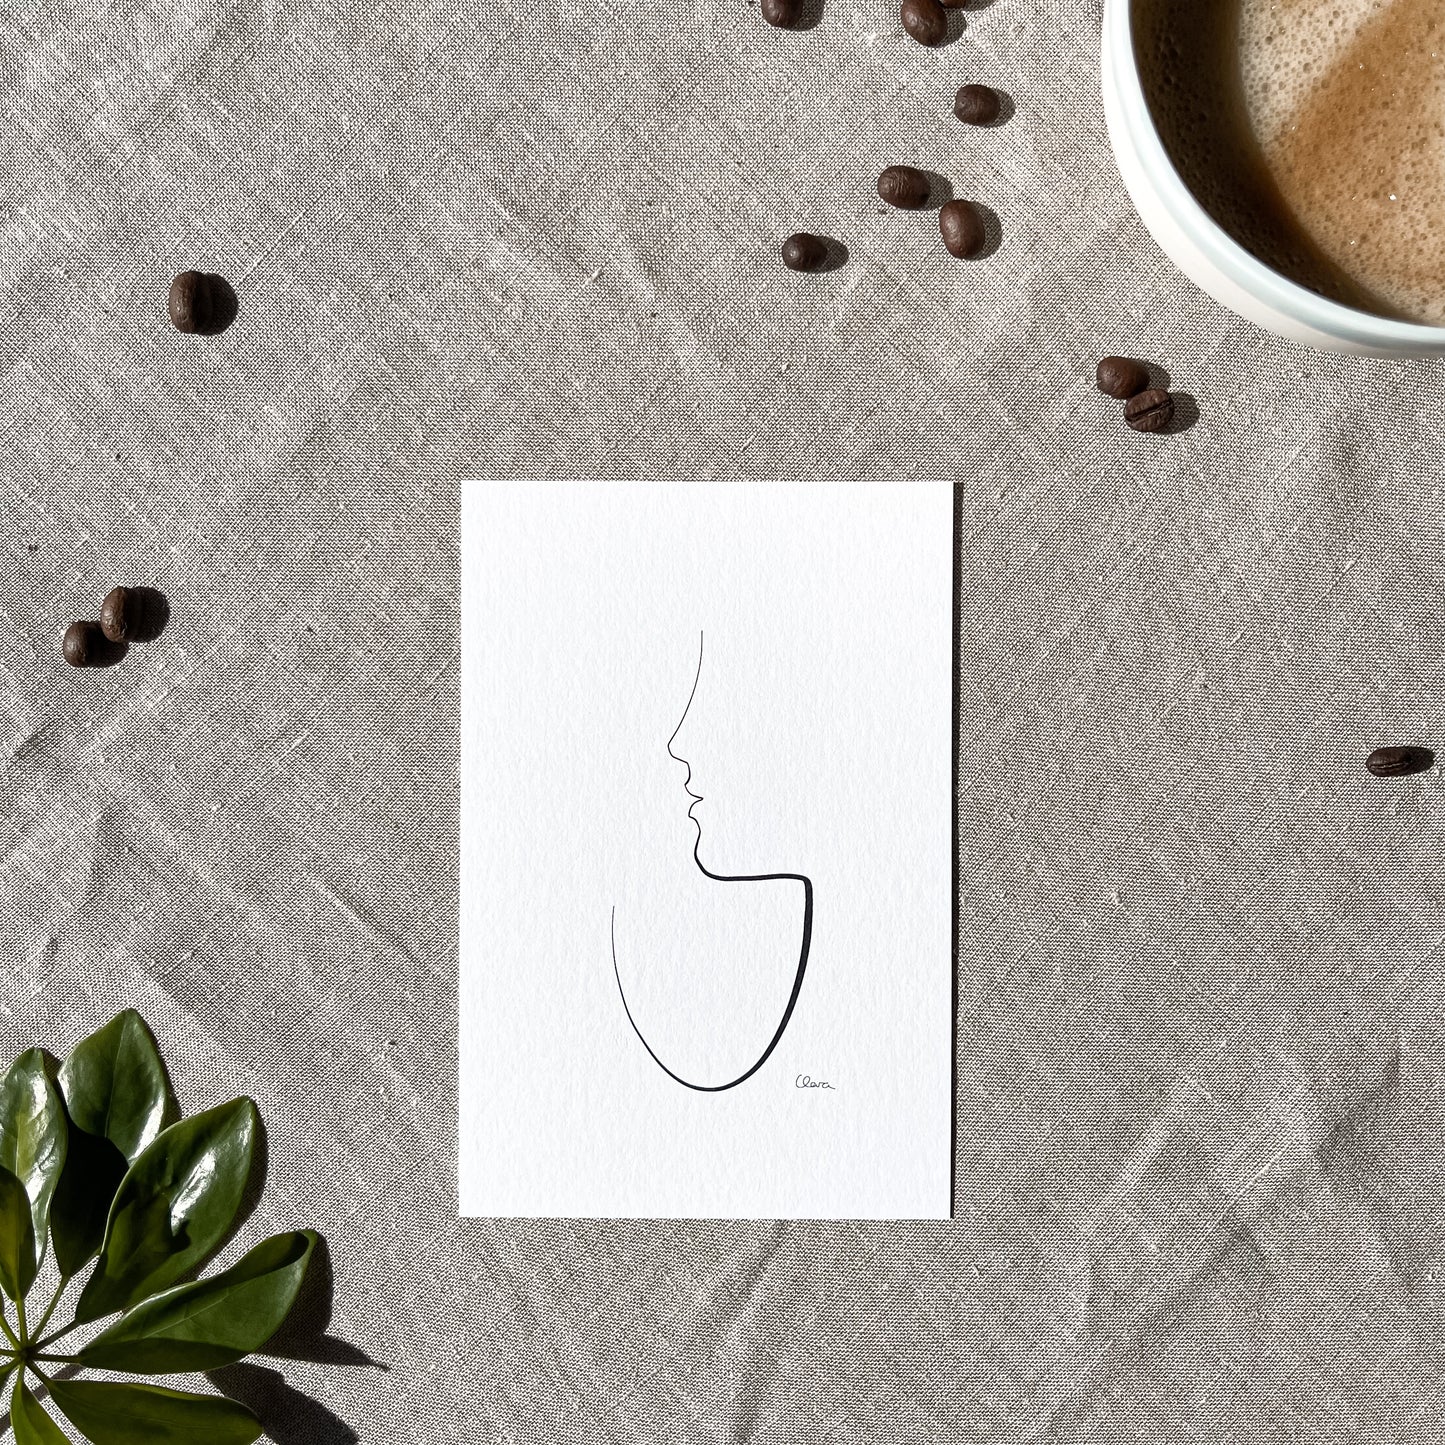 Kaffee oder Tee ? Nr. 9-JUDITH CLARA-10x15 cm (zartweiß) Papier 300g-one-line-art